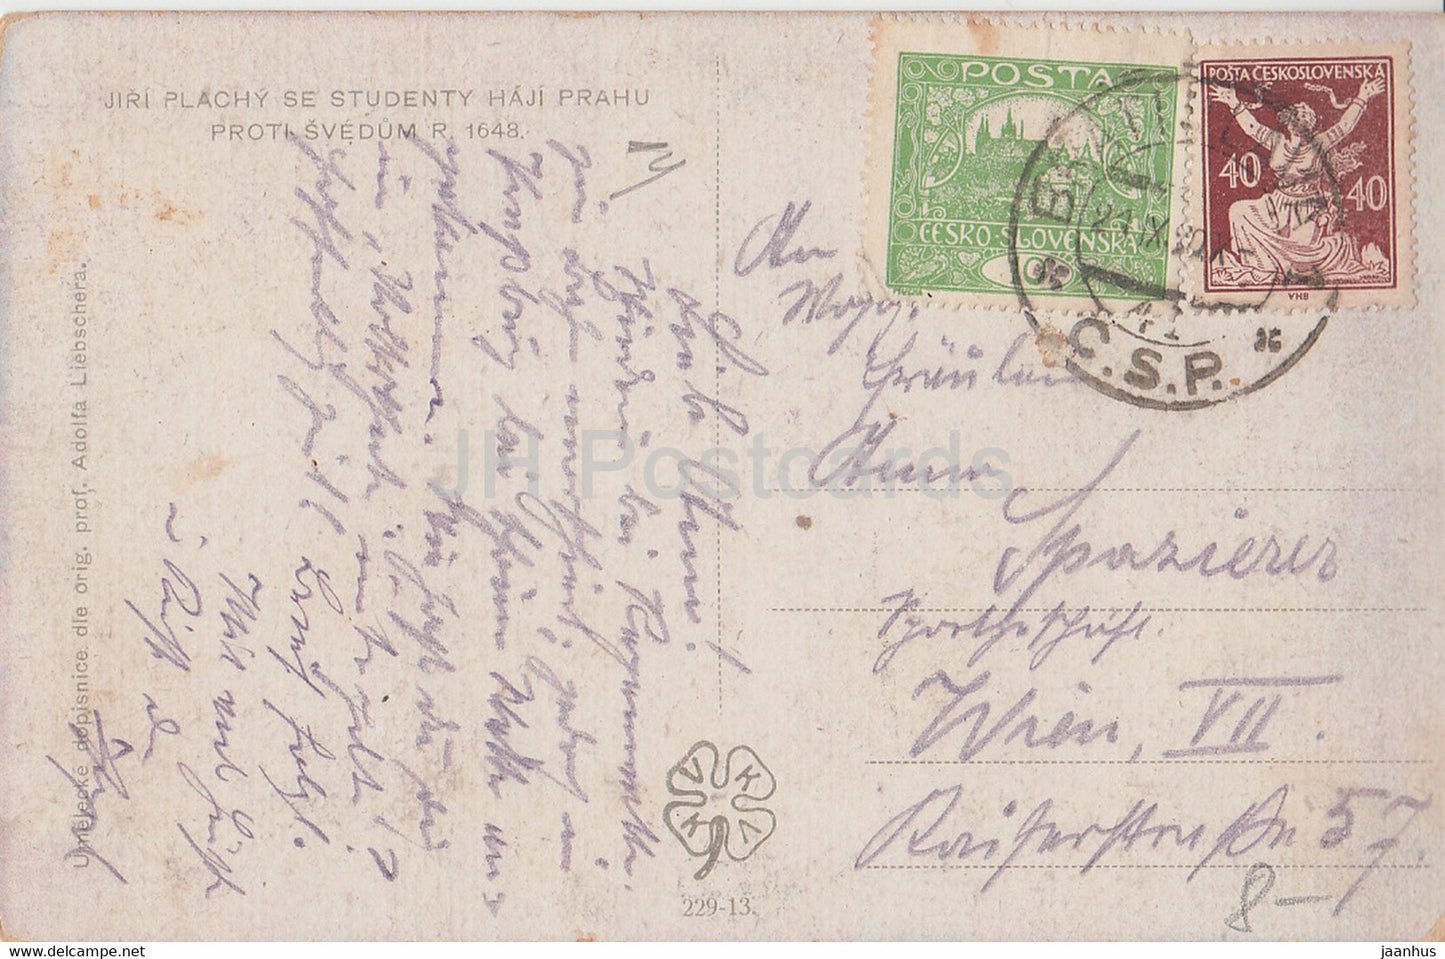 Jiri Plachy se Studenty Haji Prahu Proti Svedum 1648 - old postcard - Czechoslovakia - Czech Republic - used